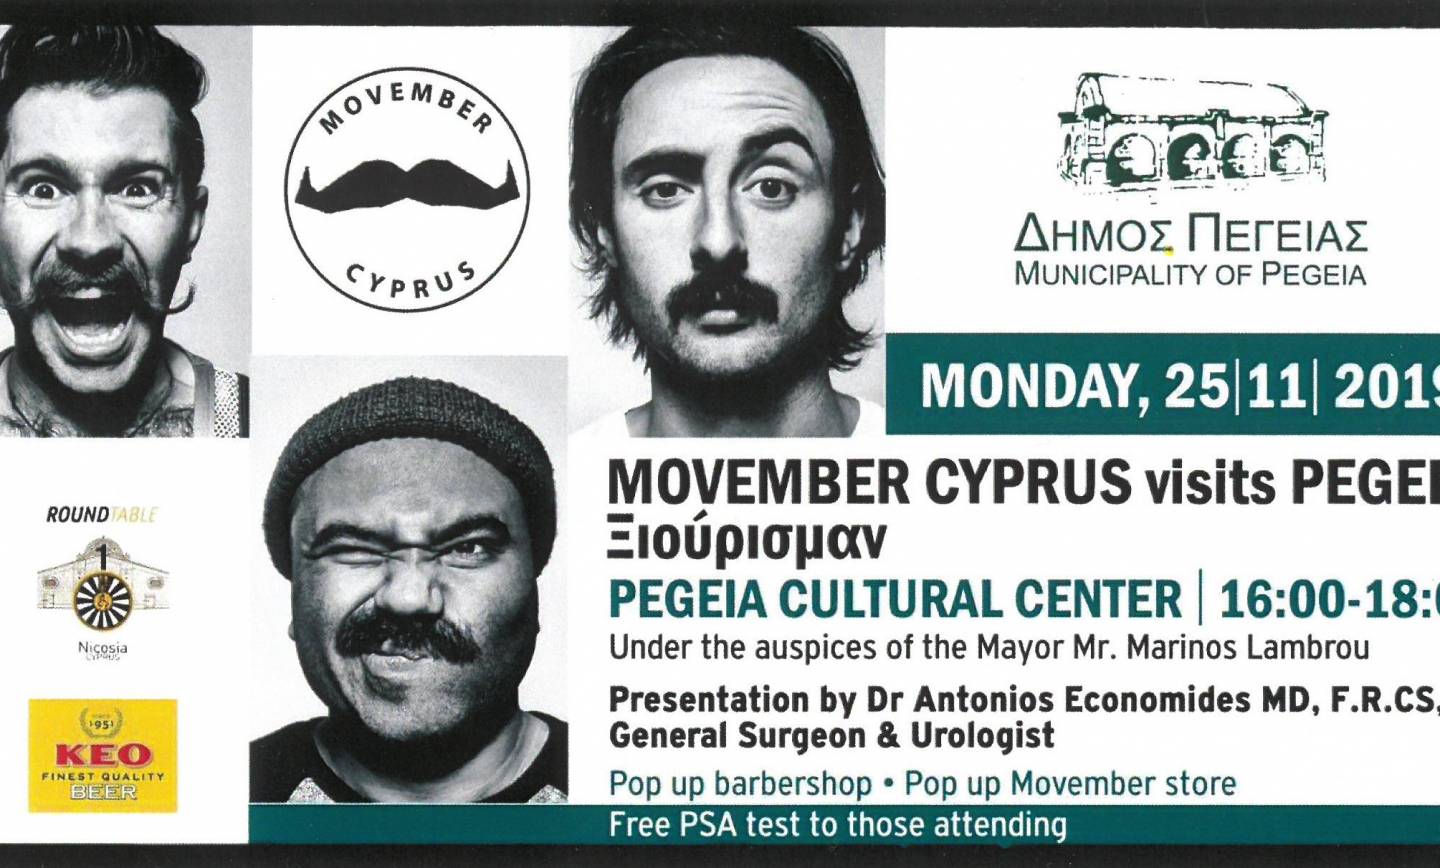 MOVEMBER CYPRUS, ON MONDAY 25/11/2019 AT PEGEIA